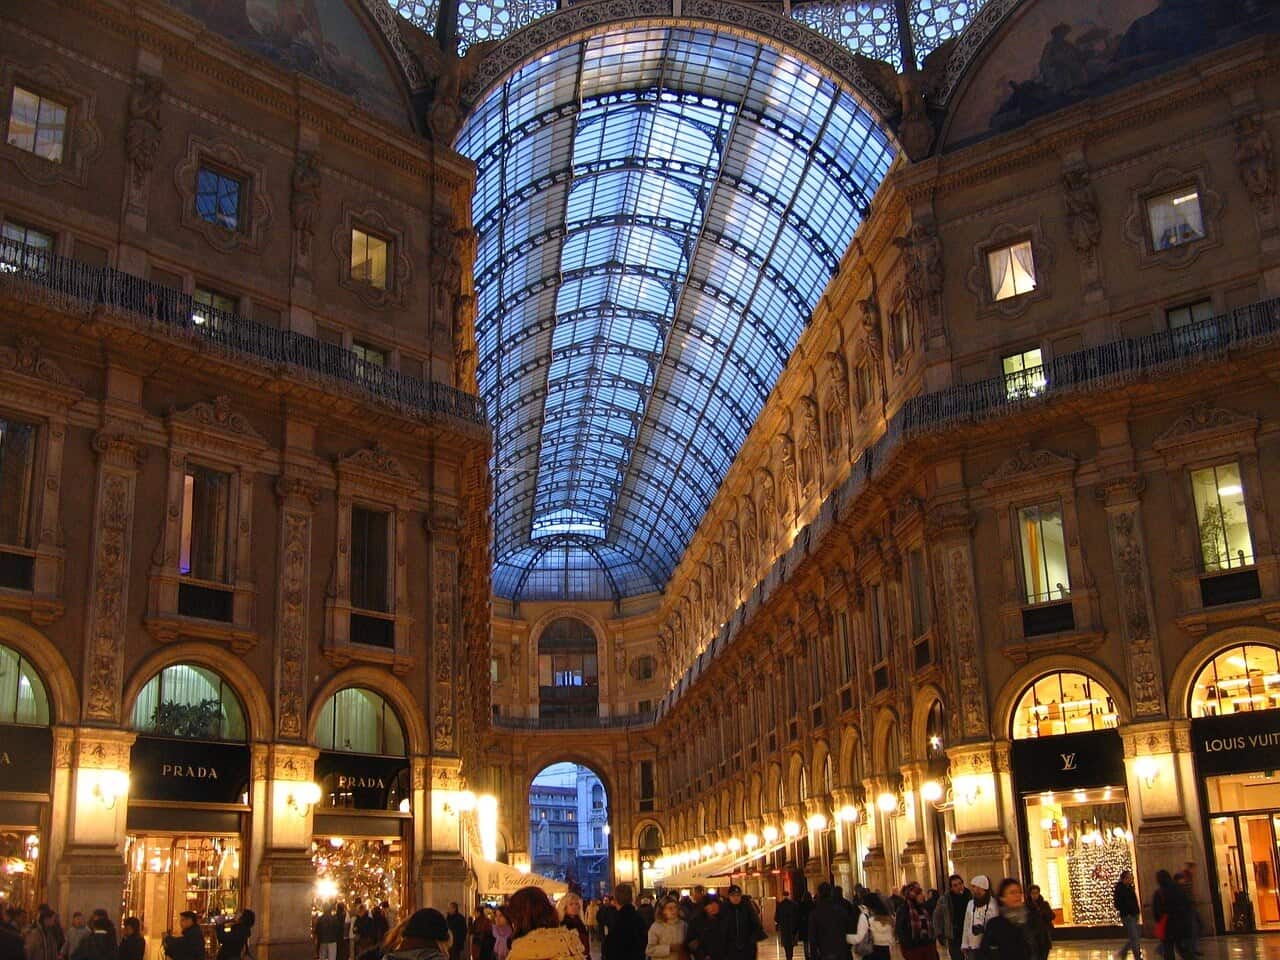 Corso Vittorio Emanuele II - Milan